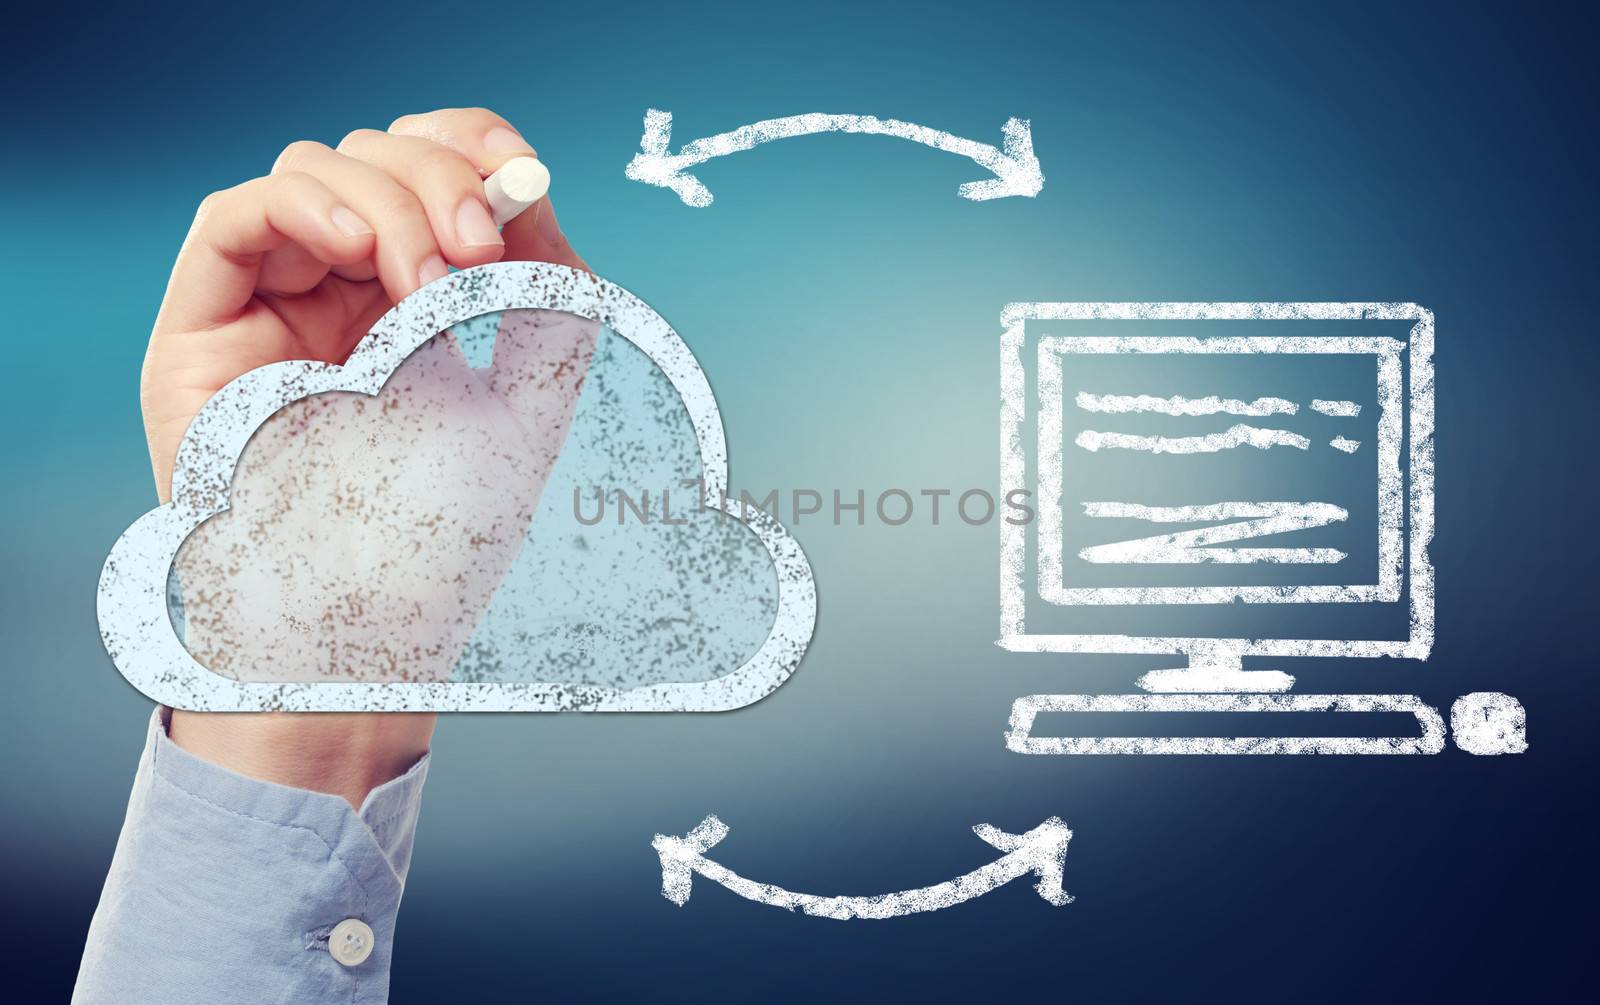 Cloud Computing Connectivity Concept 